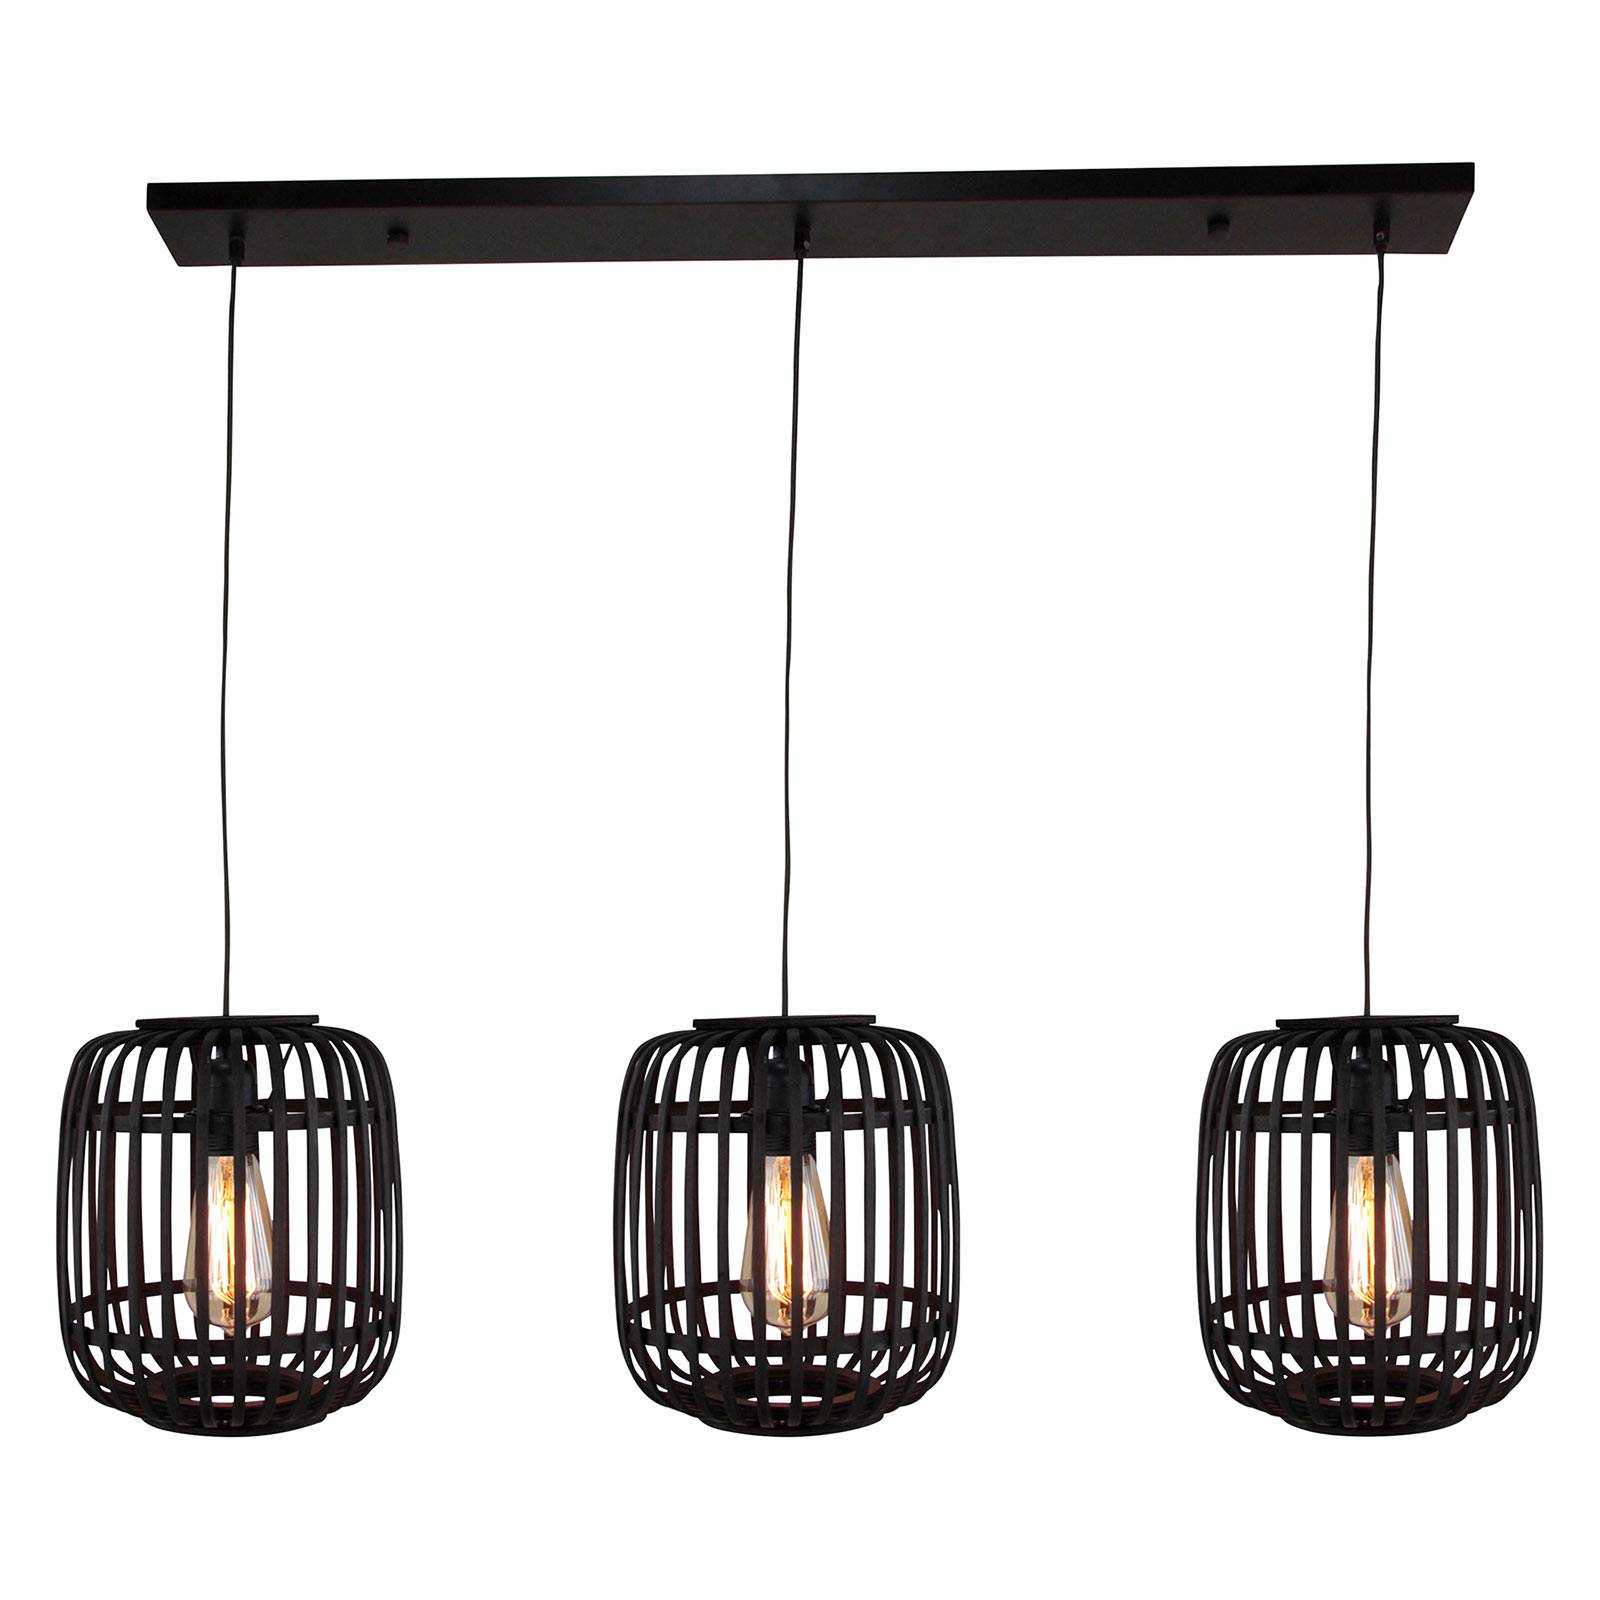 Woodrow hanging lamp, 3 bamboo cage lampshades